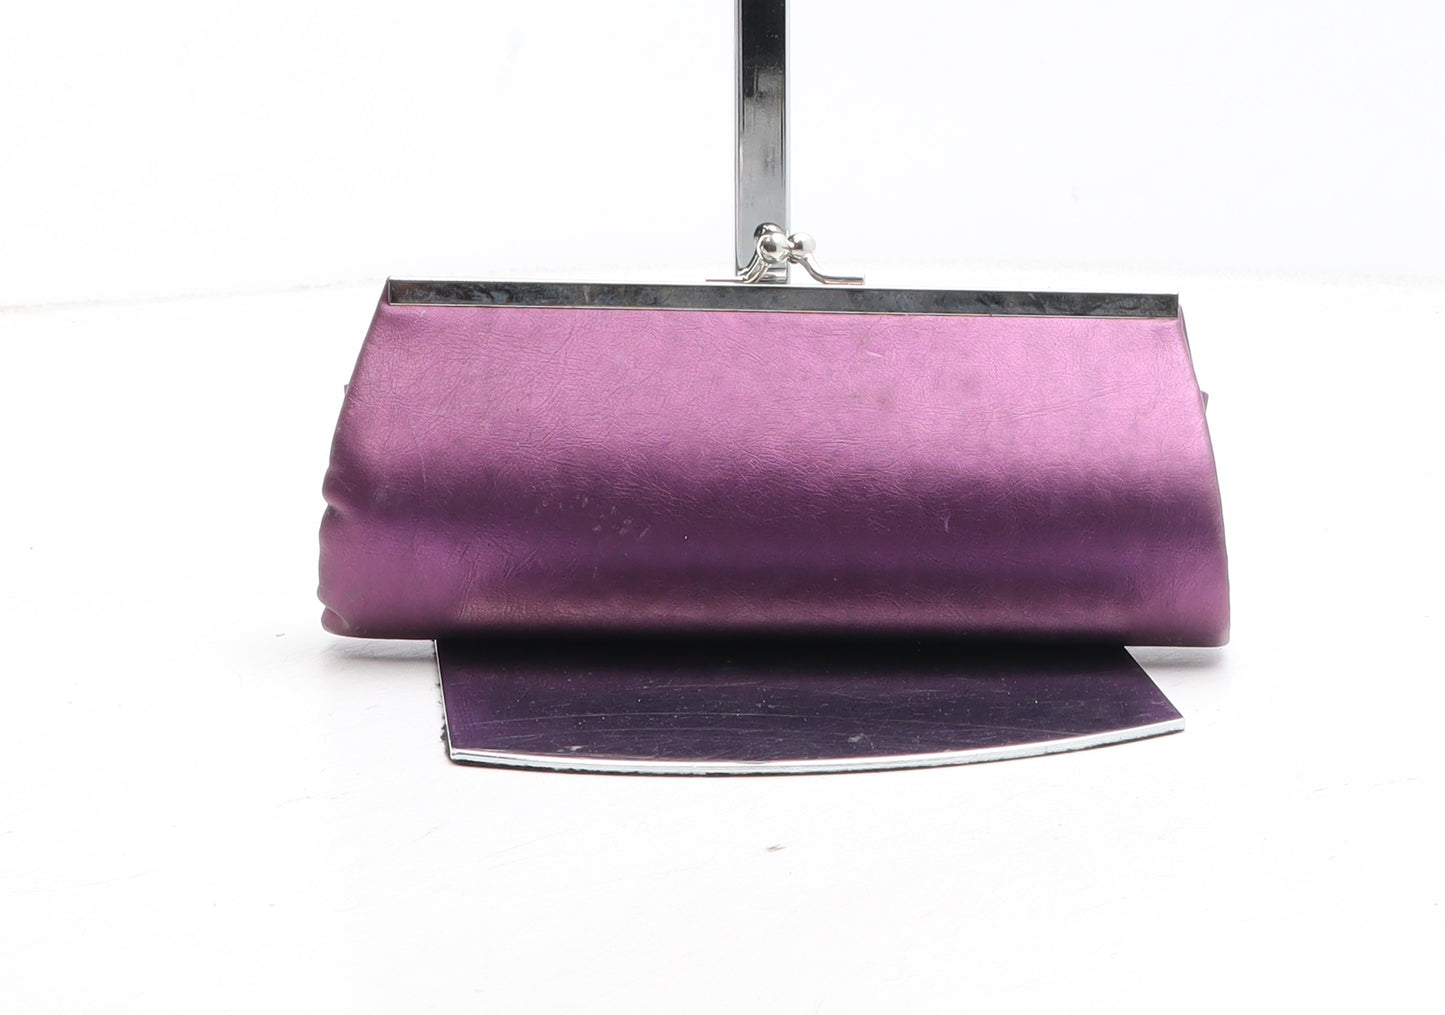 Preworn Womens Purple Polyester Clutch Size Small